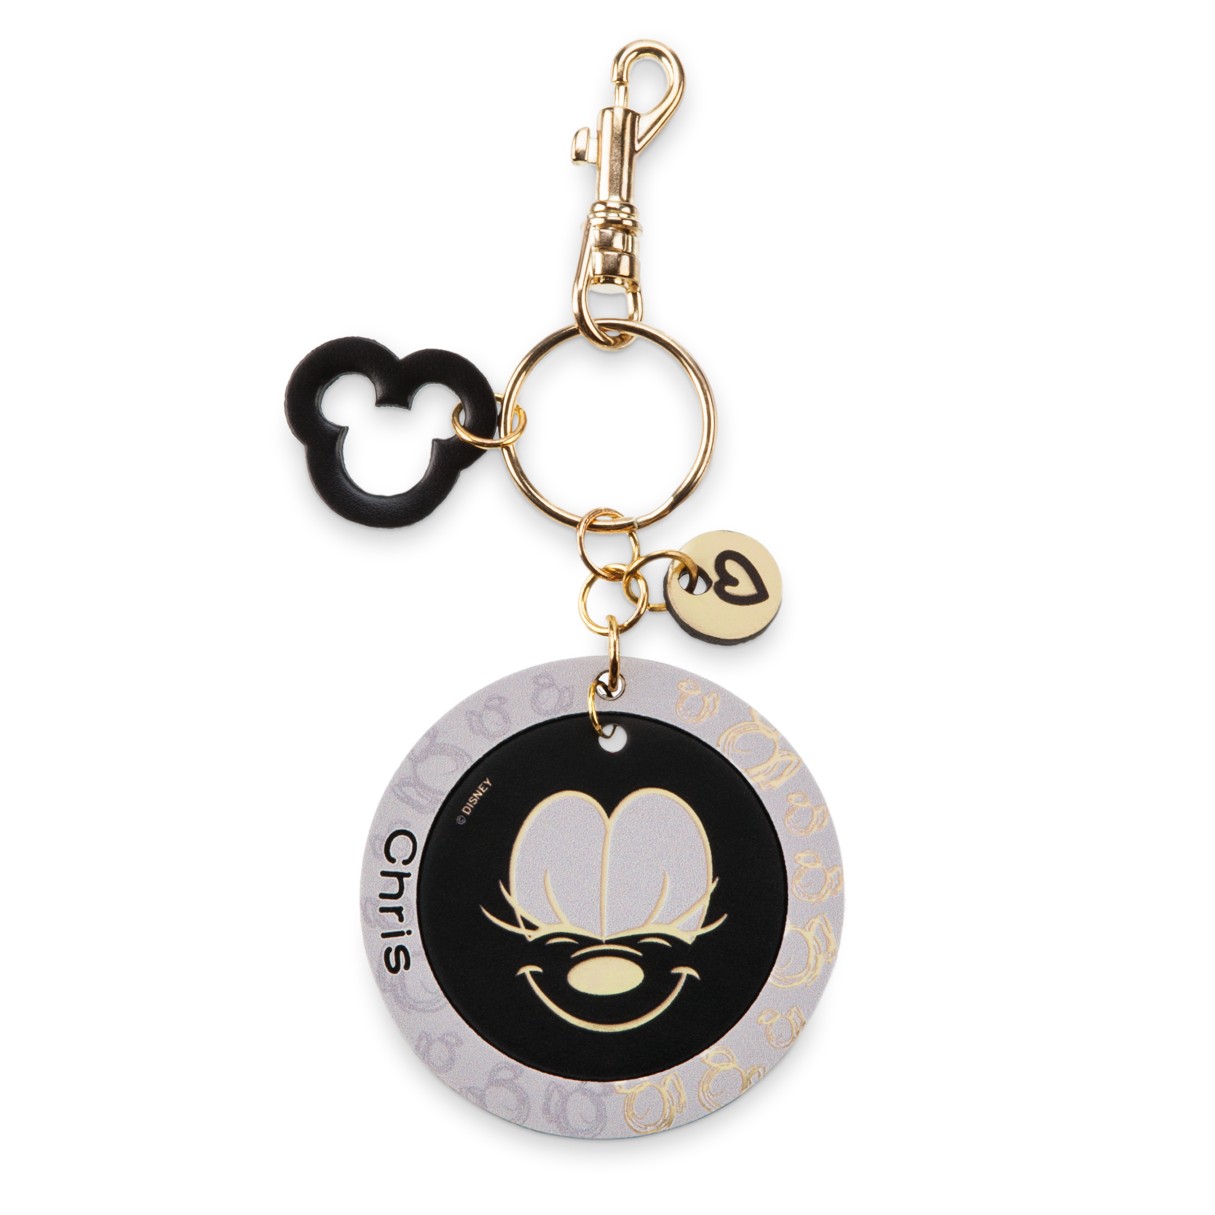 Mickey & Minnie Leather Keychain – Personalizable